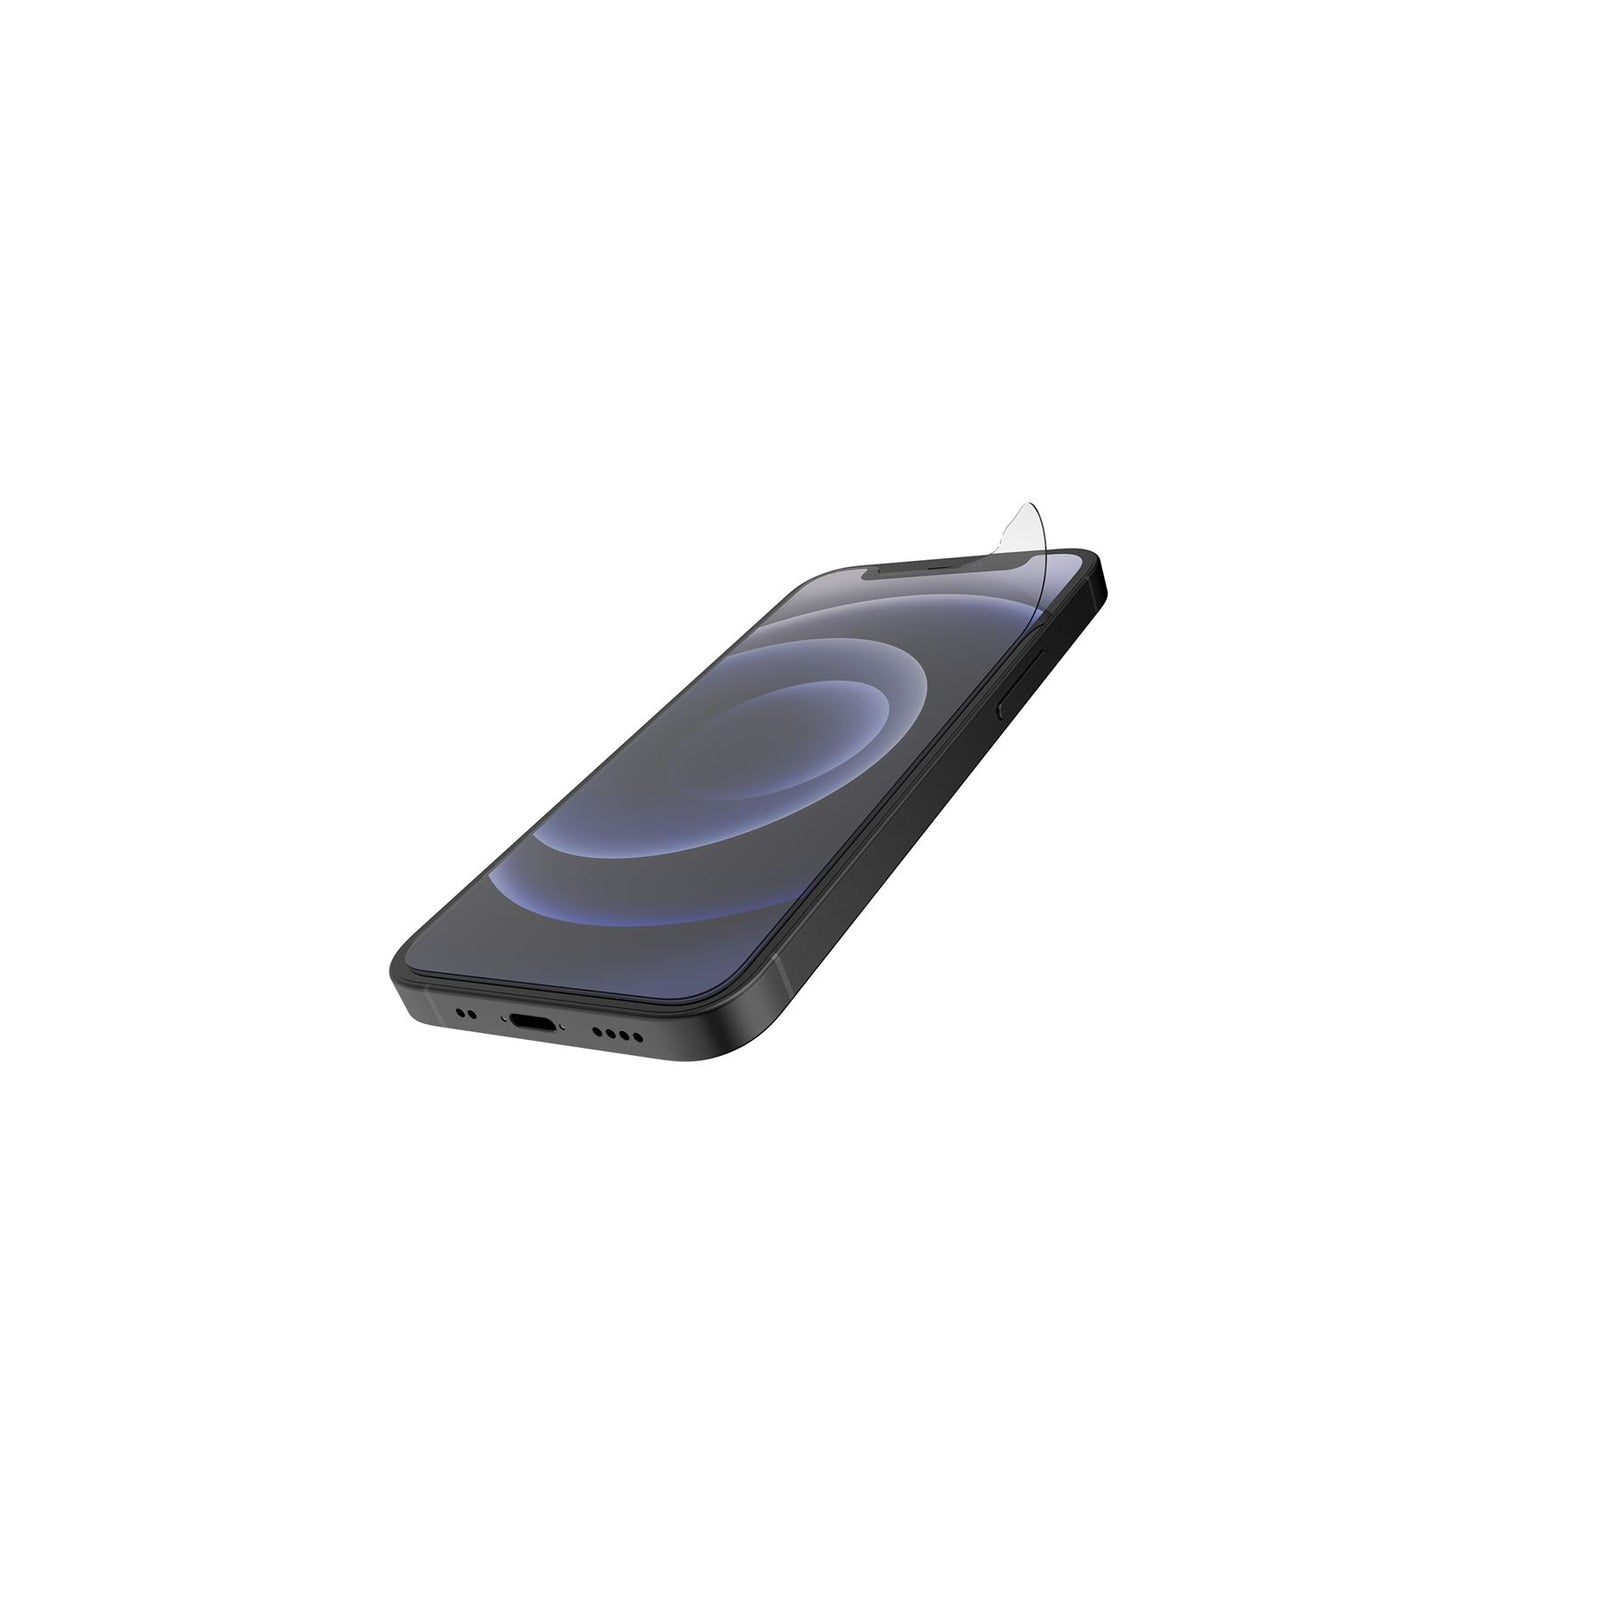 Impact Shield - Apple iPhone 12 Mini Screen Protector